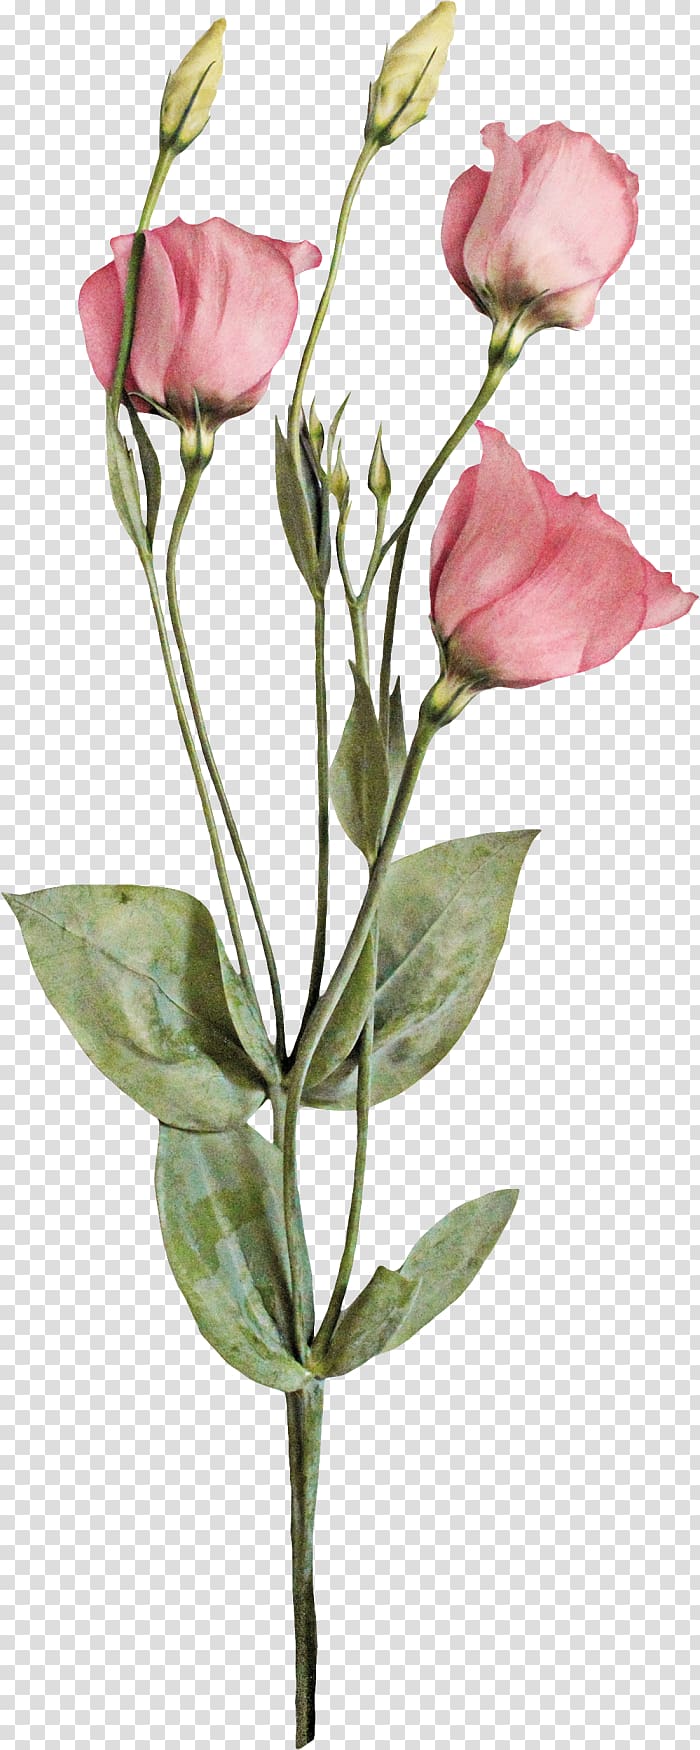 Garden roses Centifolia roses Cut flowers Bud Plant stem, romantic pink flowers transparent background PNG clipart